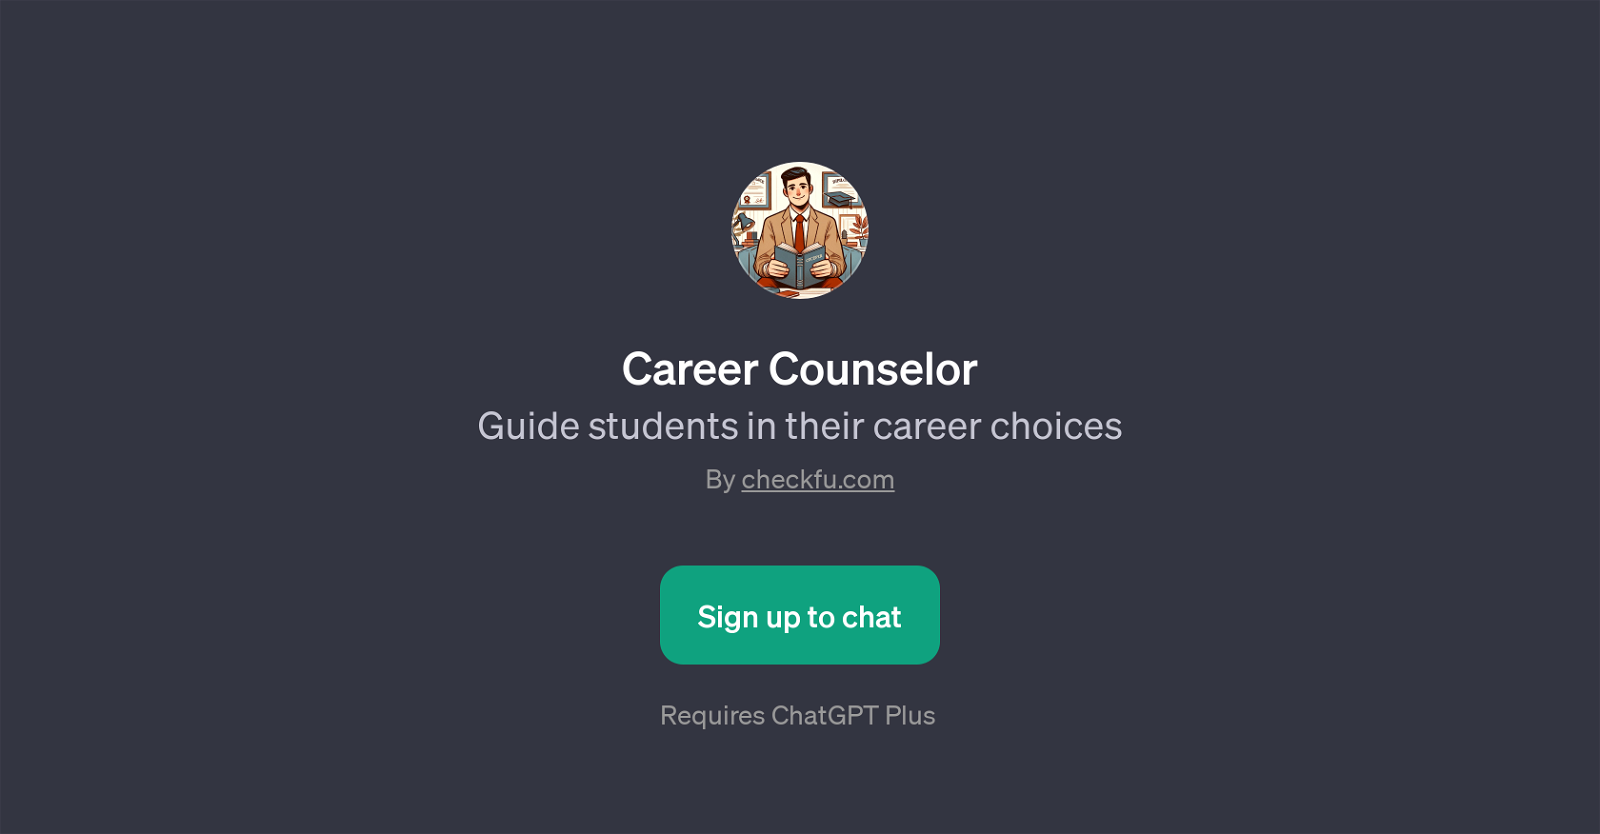 Career Counselor website